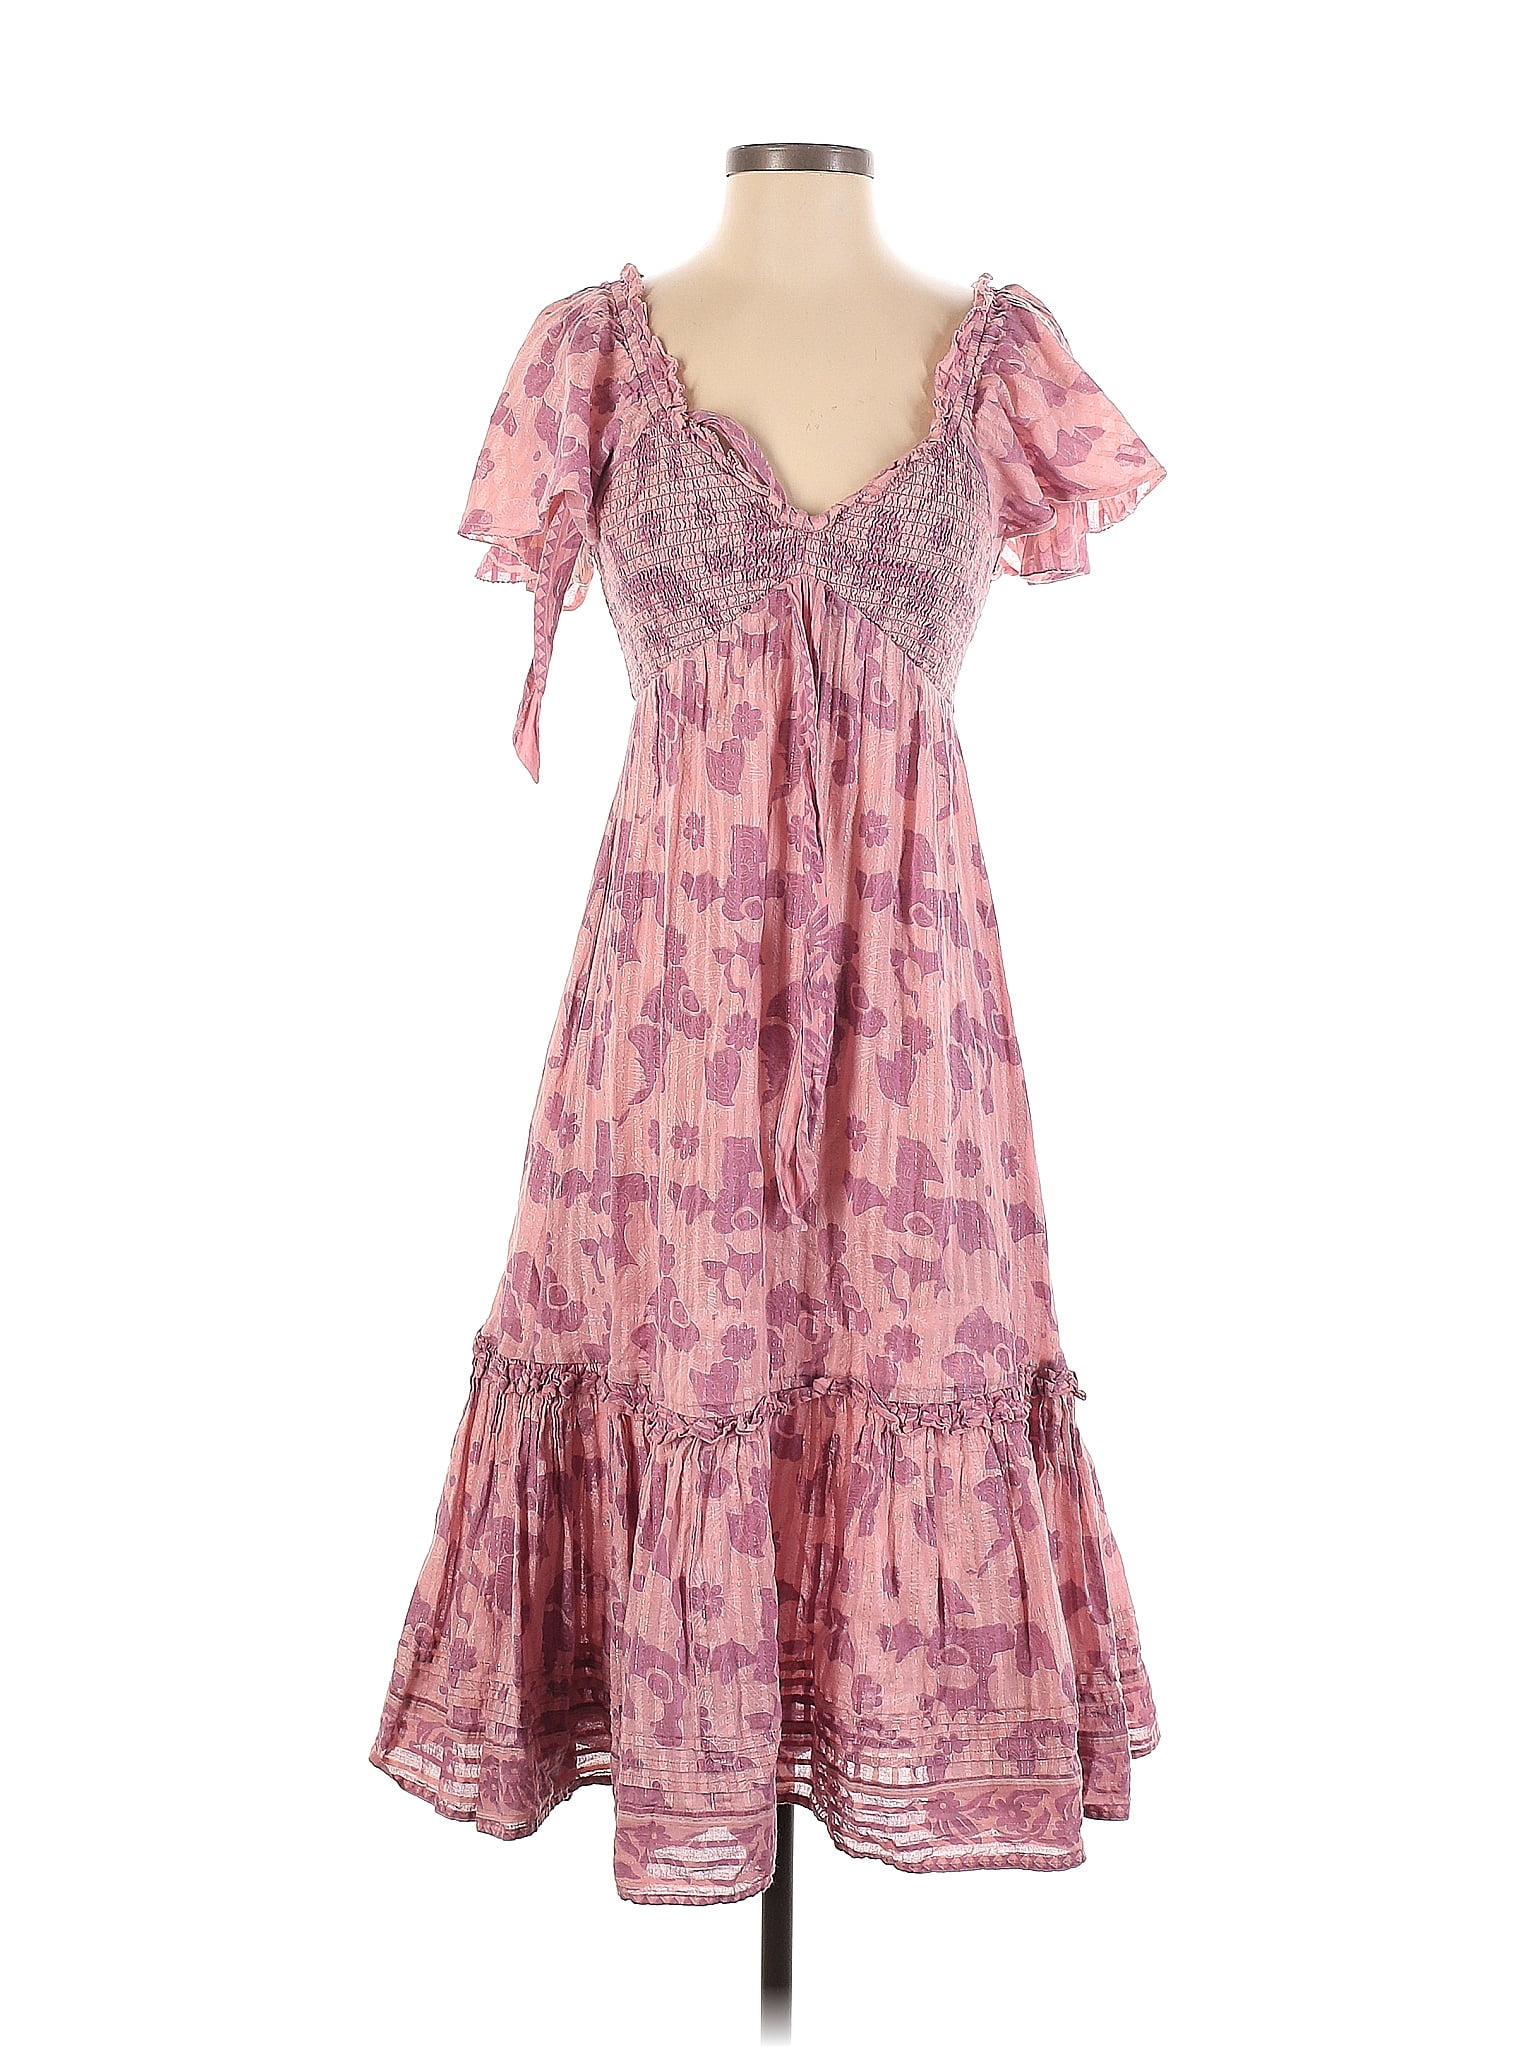 Cleobella Multi Color Pink Casual Dress Size XS - 66% off | thredUP